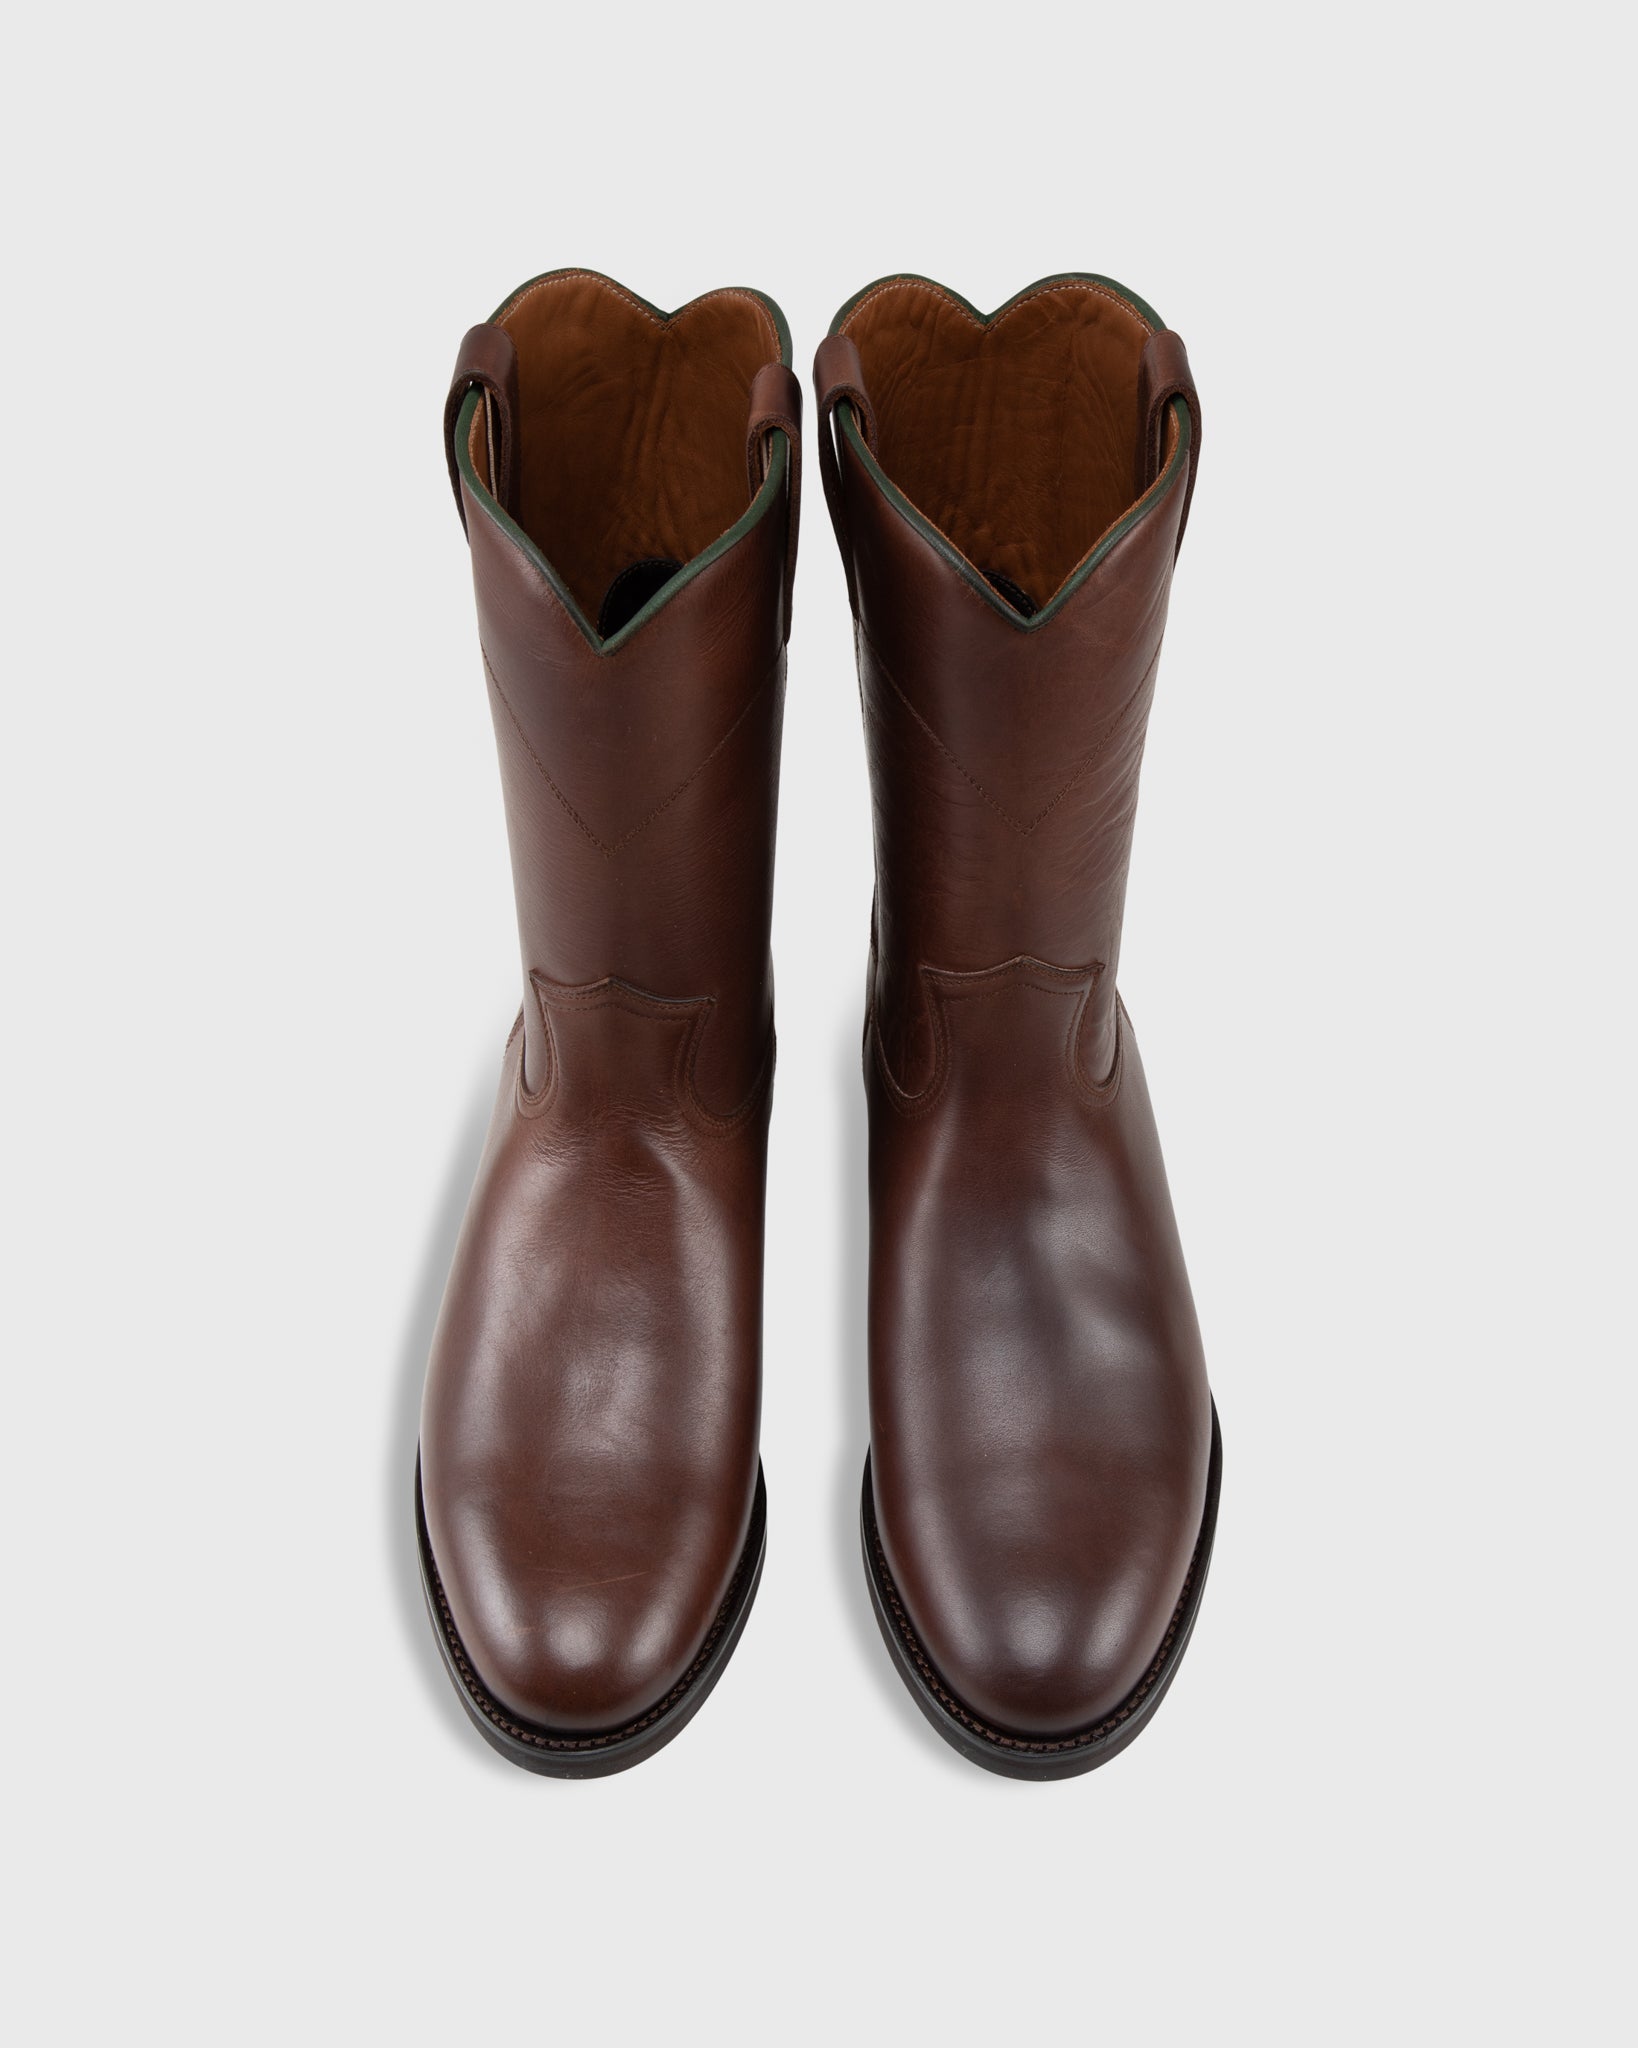 Vaquero Roper Boot in Dark Brown Leather